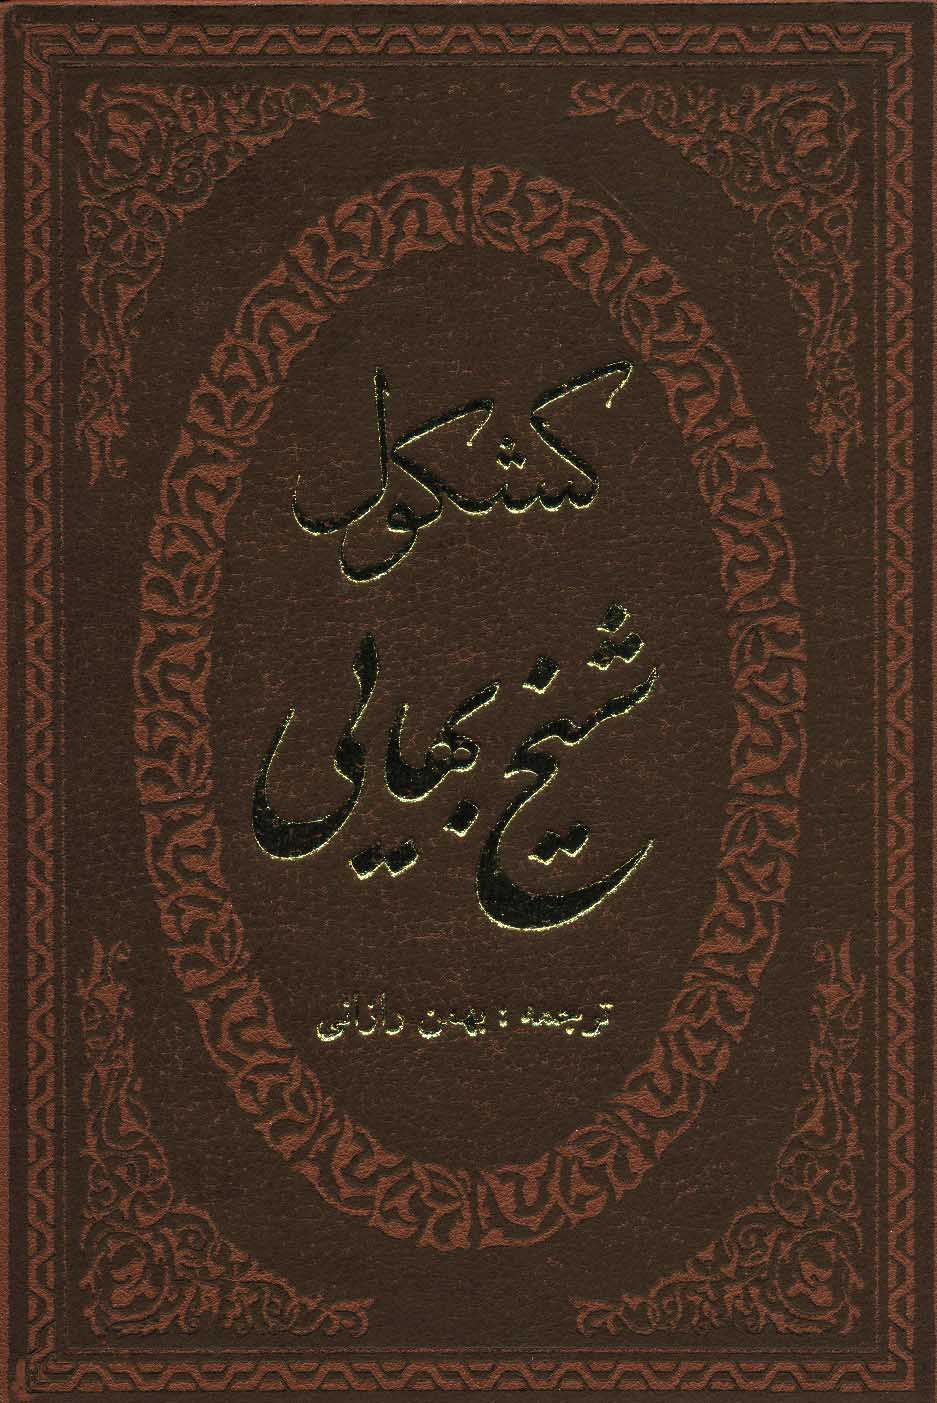  کتاب کشکول شیخ بهایی